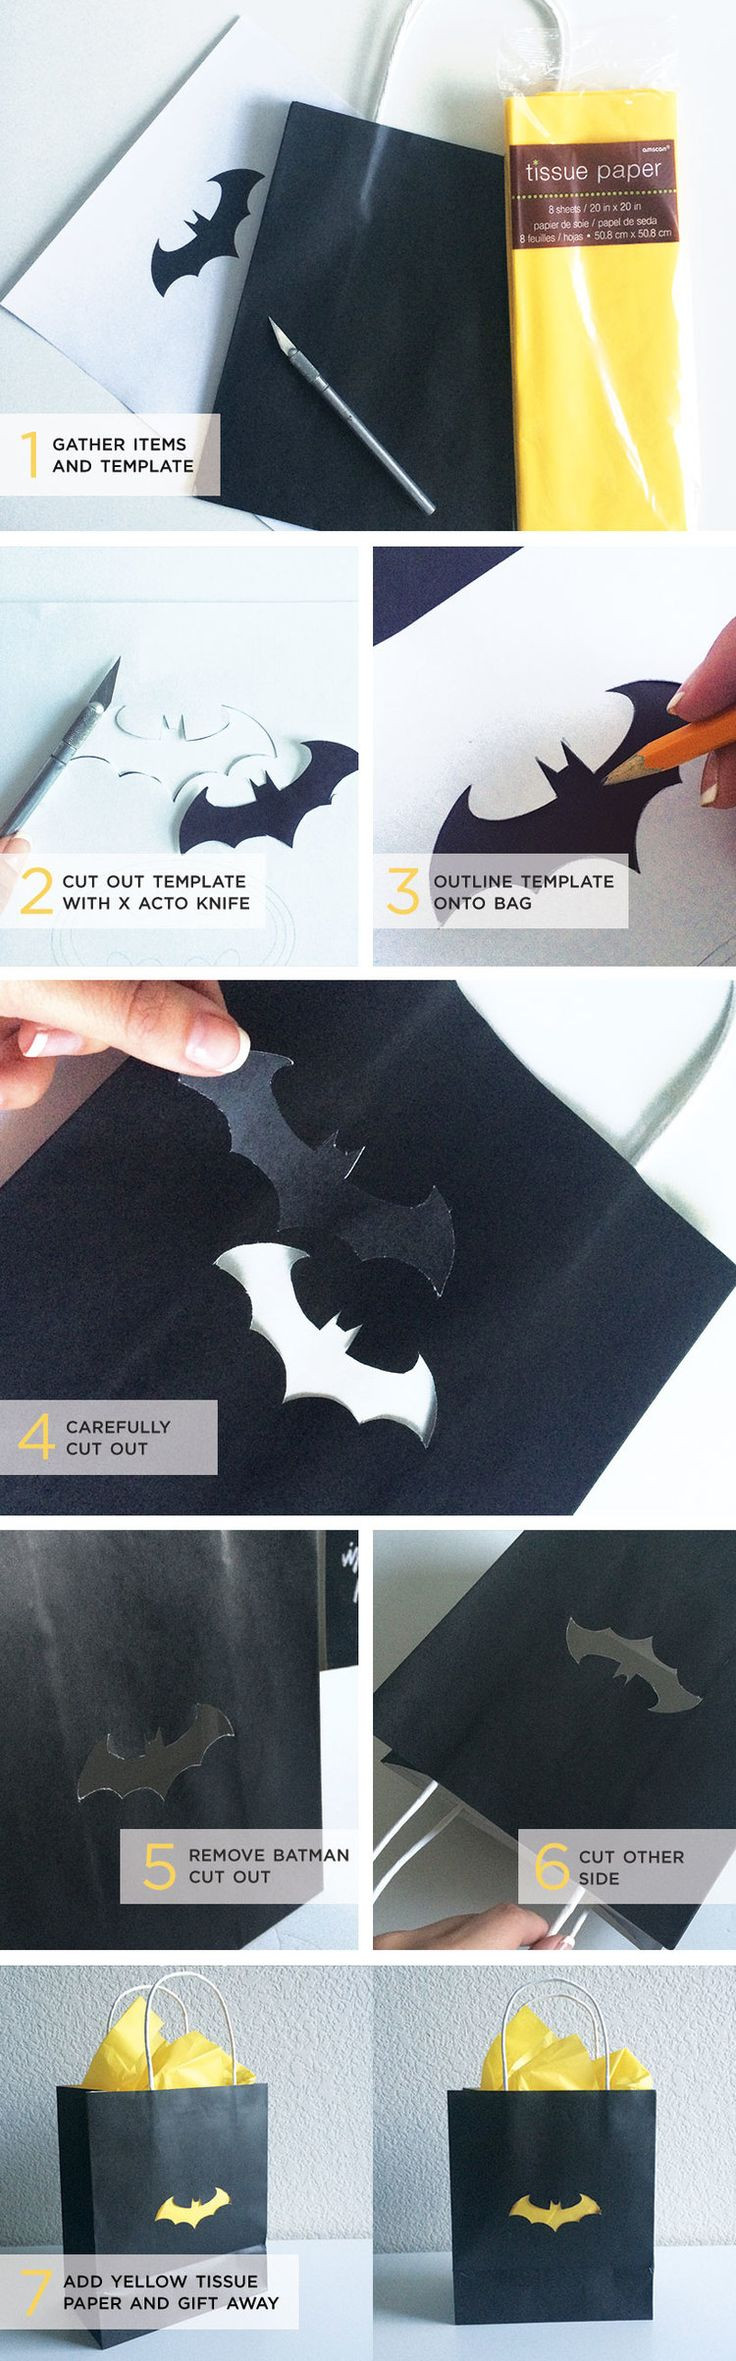 DIY Batman Gifts
 DIY Batman Gift Bag